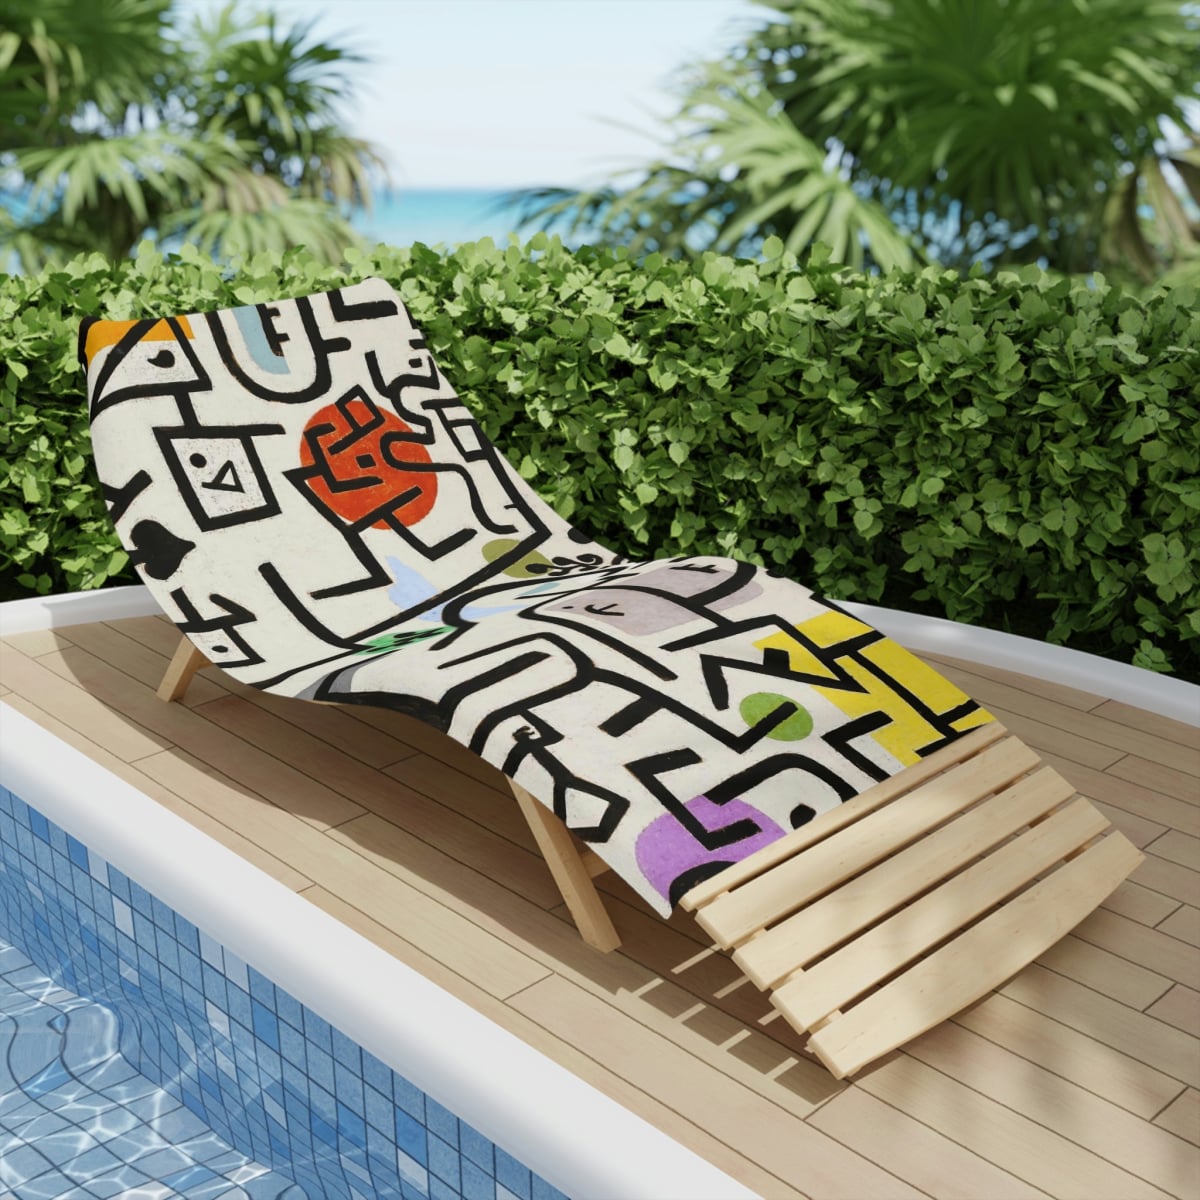 Rich Port by Paul Klee Beach Towels